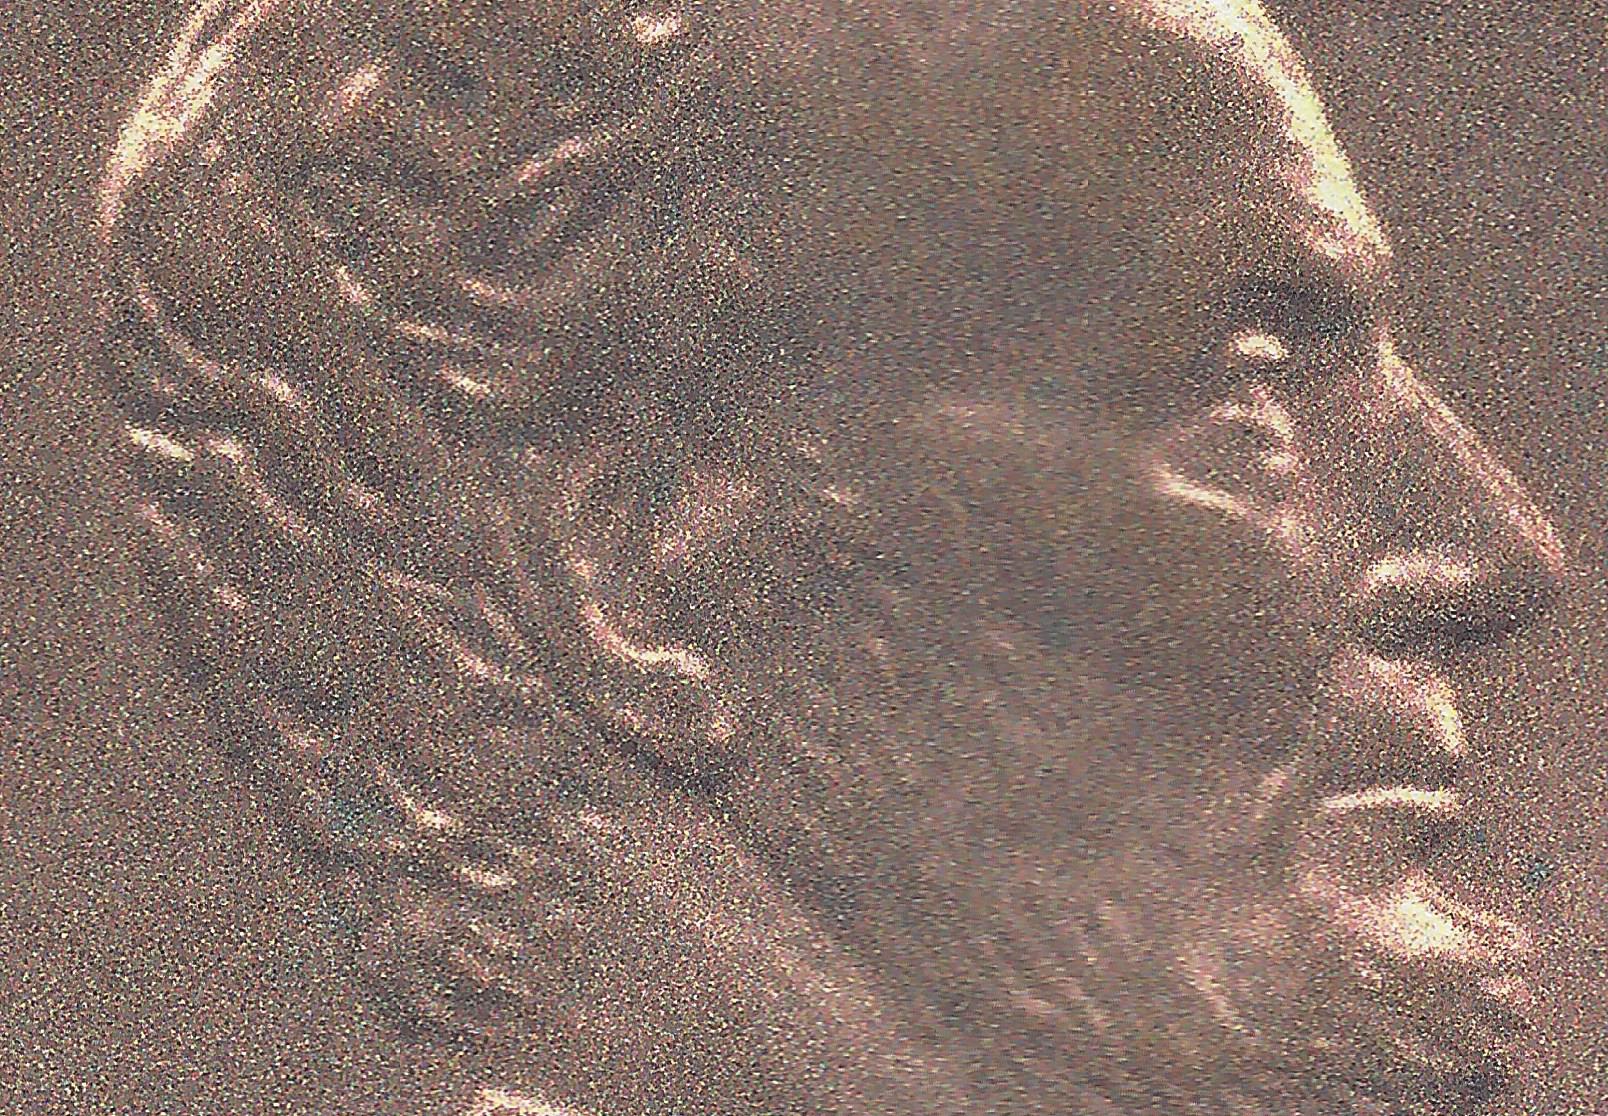 1998-p cent  obverse.jpg close up.jpg